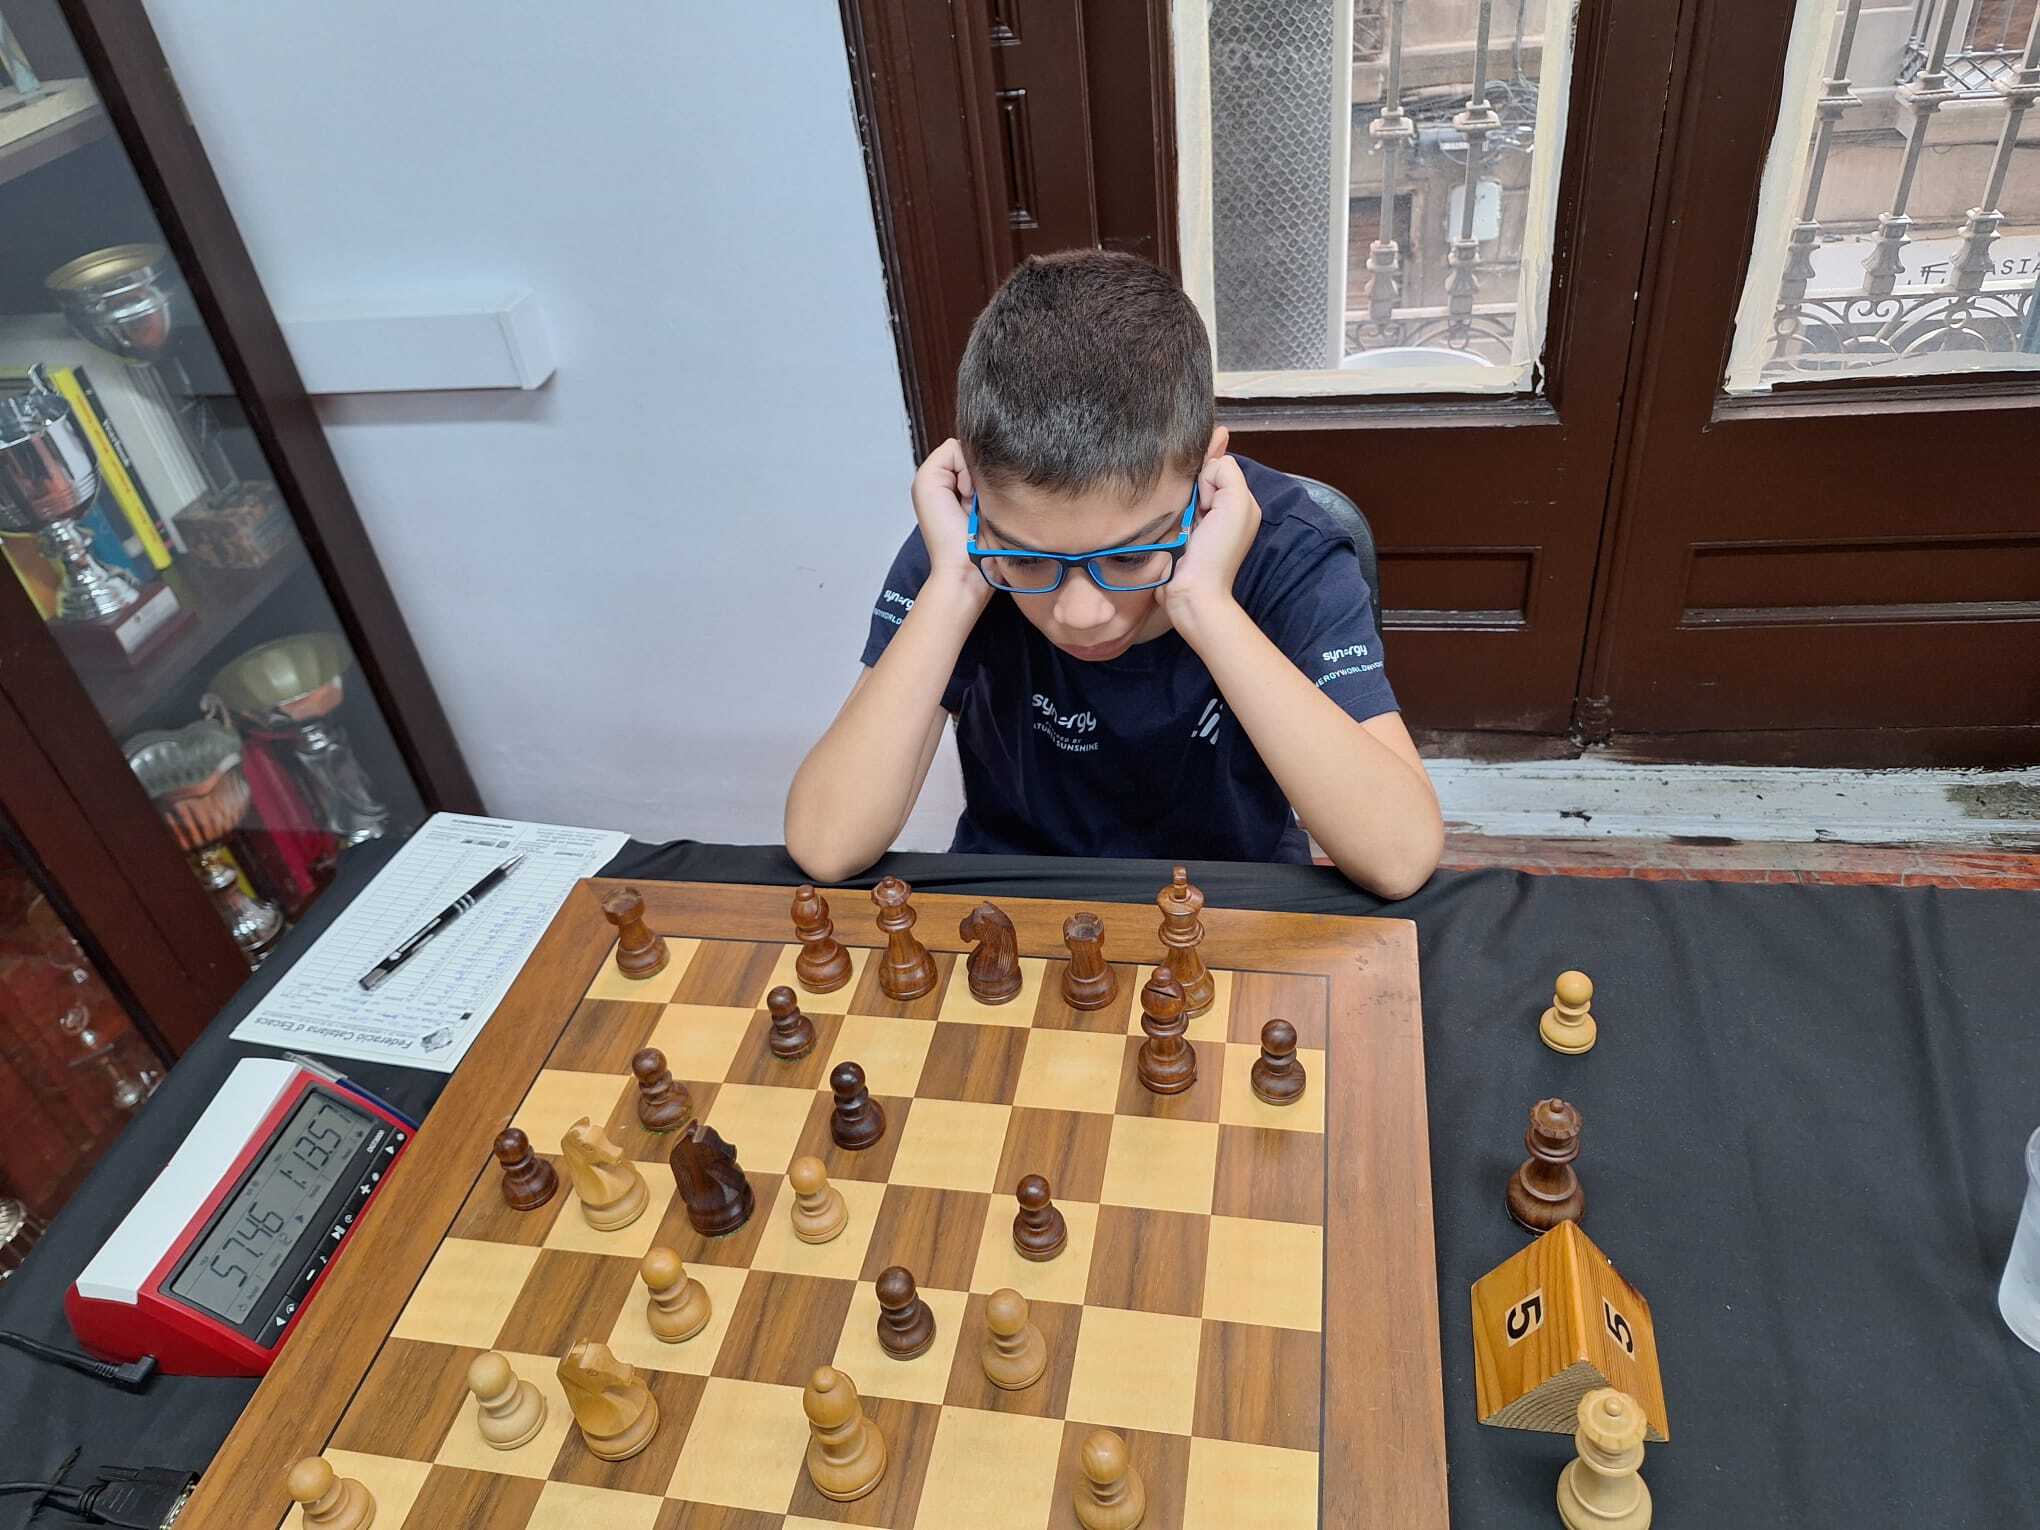 Faustino Oro 在巴塞罗那达到了他的第三个也是最后一个 IM 标准。照片：巴塞罗那国际象棋俱乐部